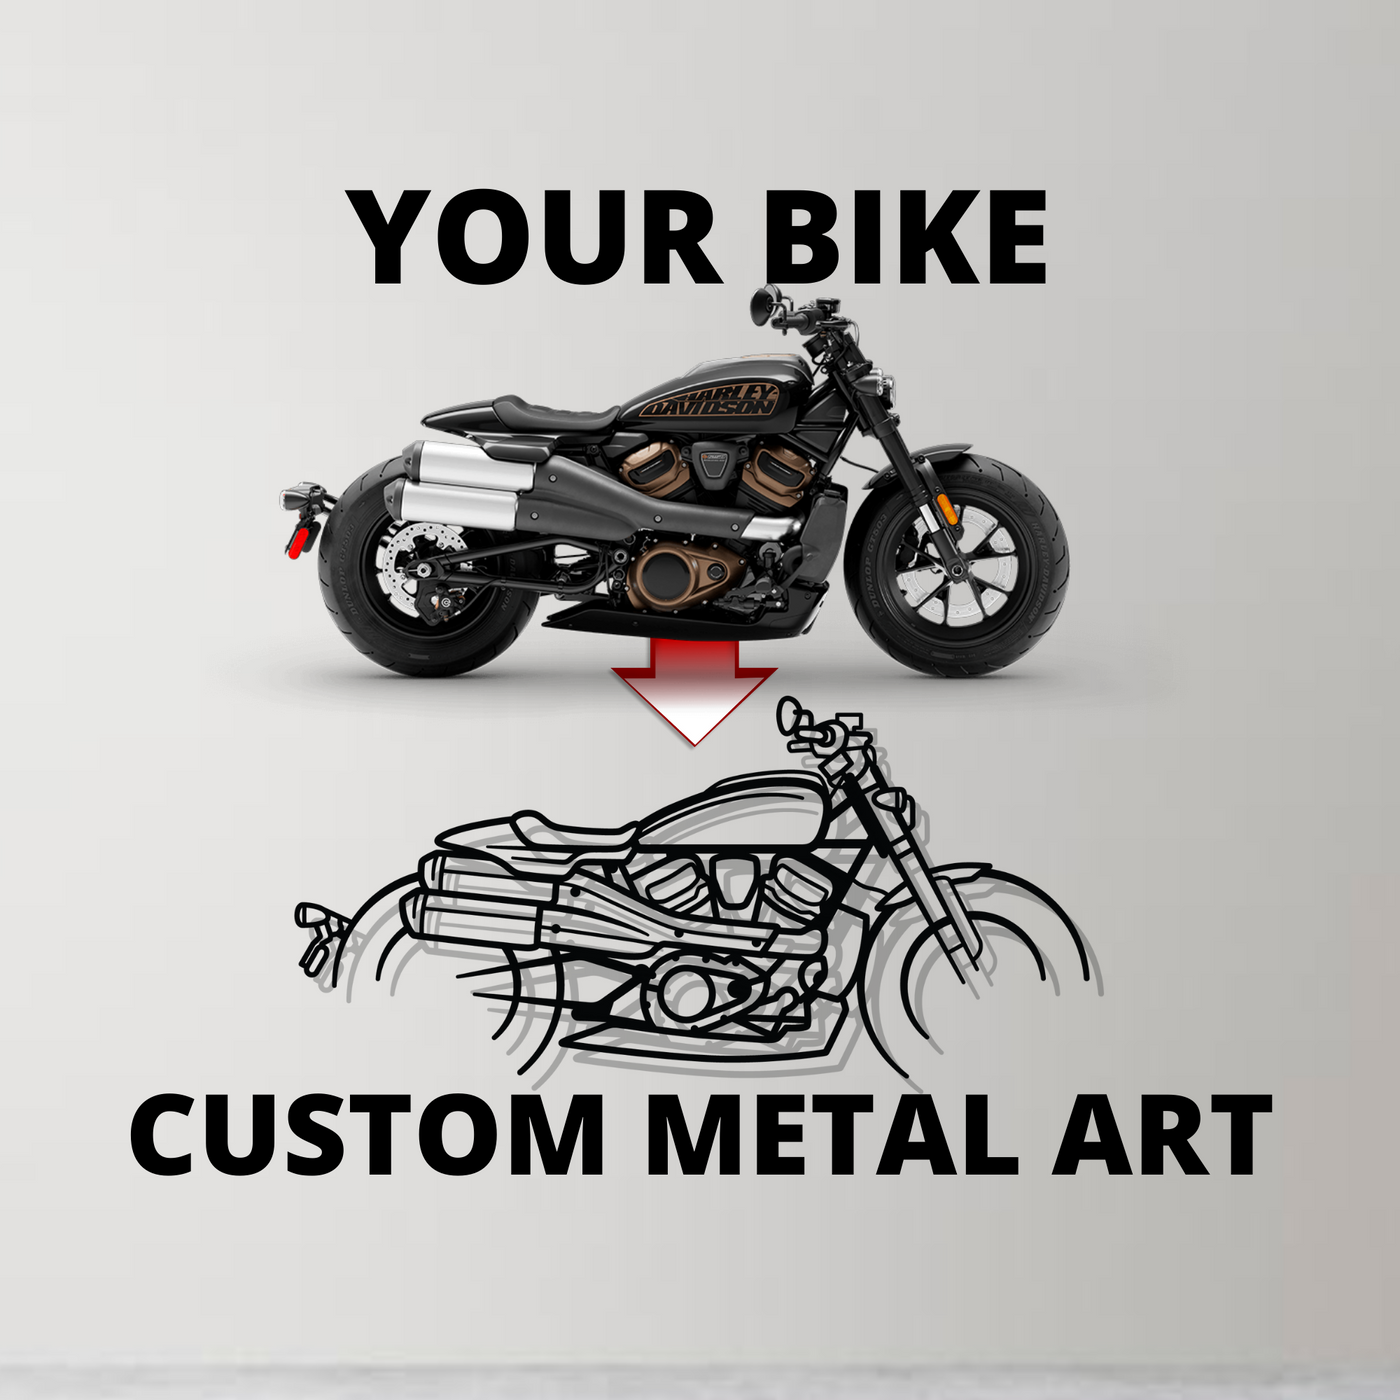 2014 Harley Davidson Road King Silhouette Metal Wall Art